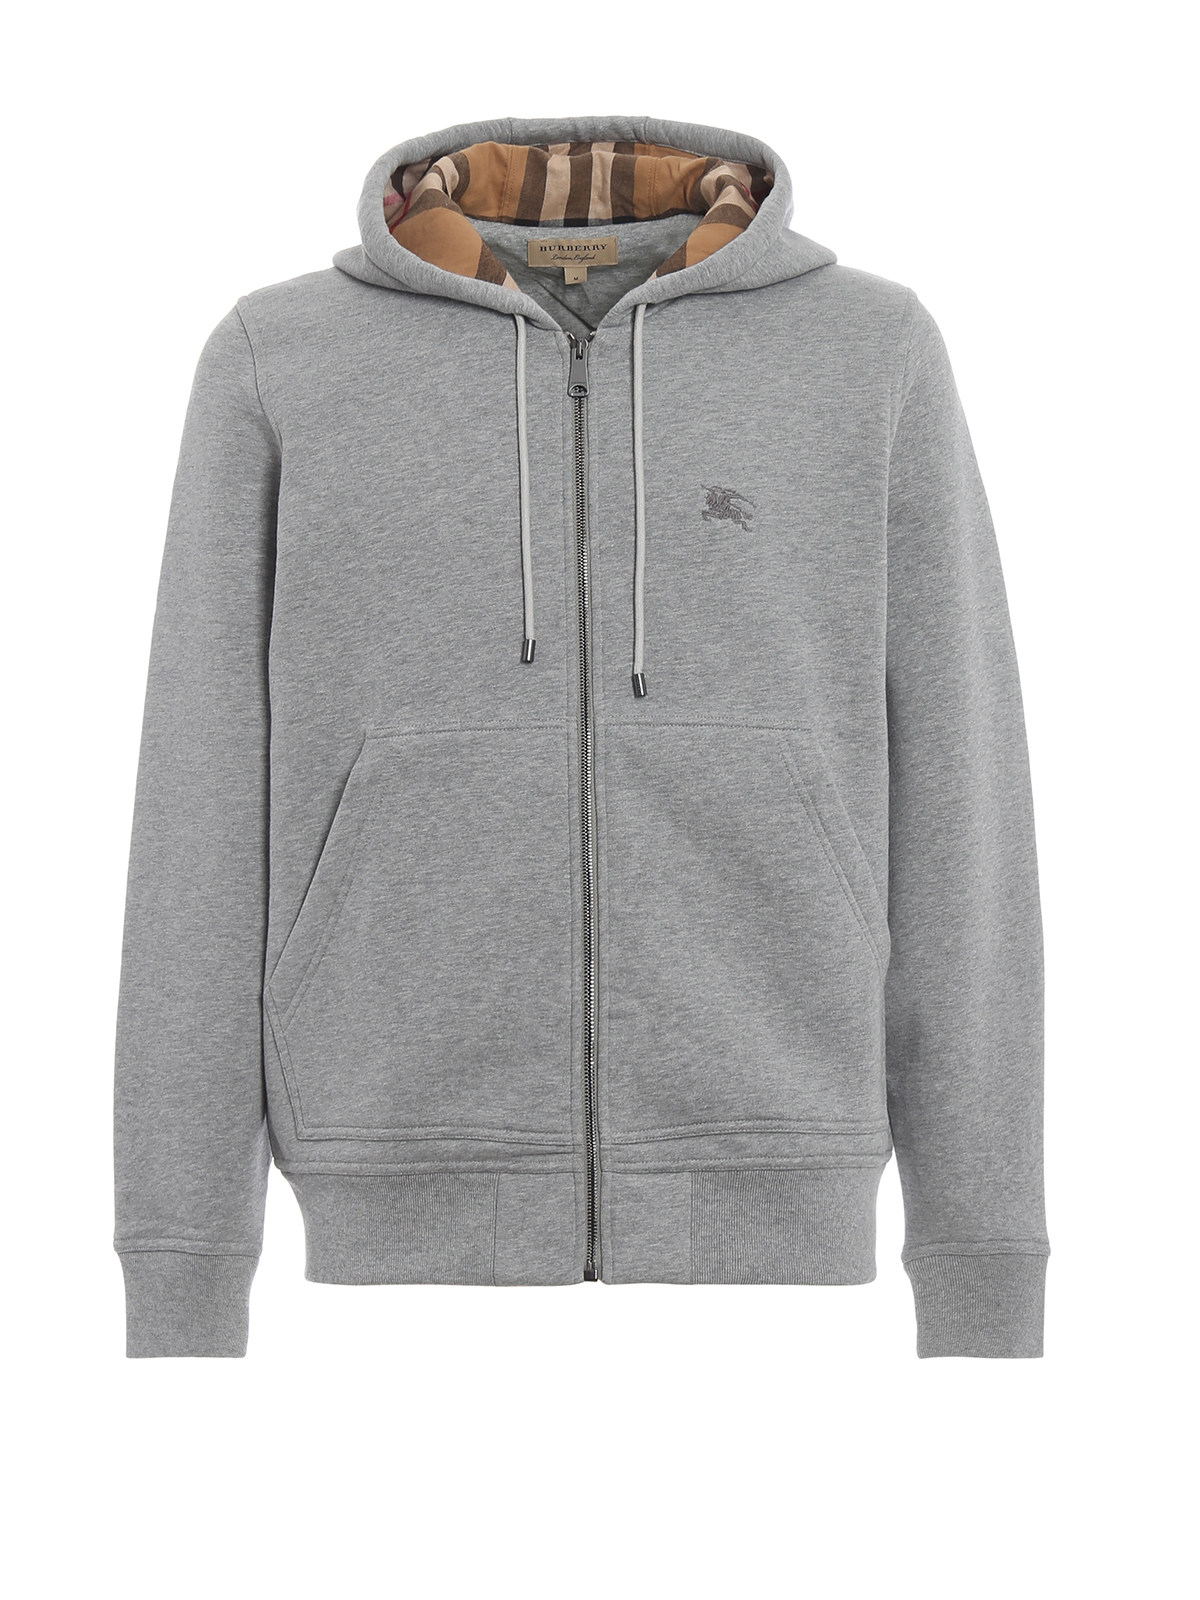 Burberry - Fordson melange grey hoodie 